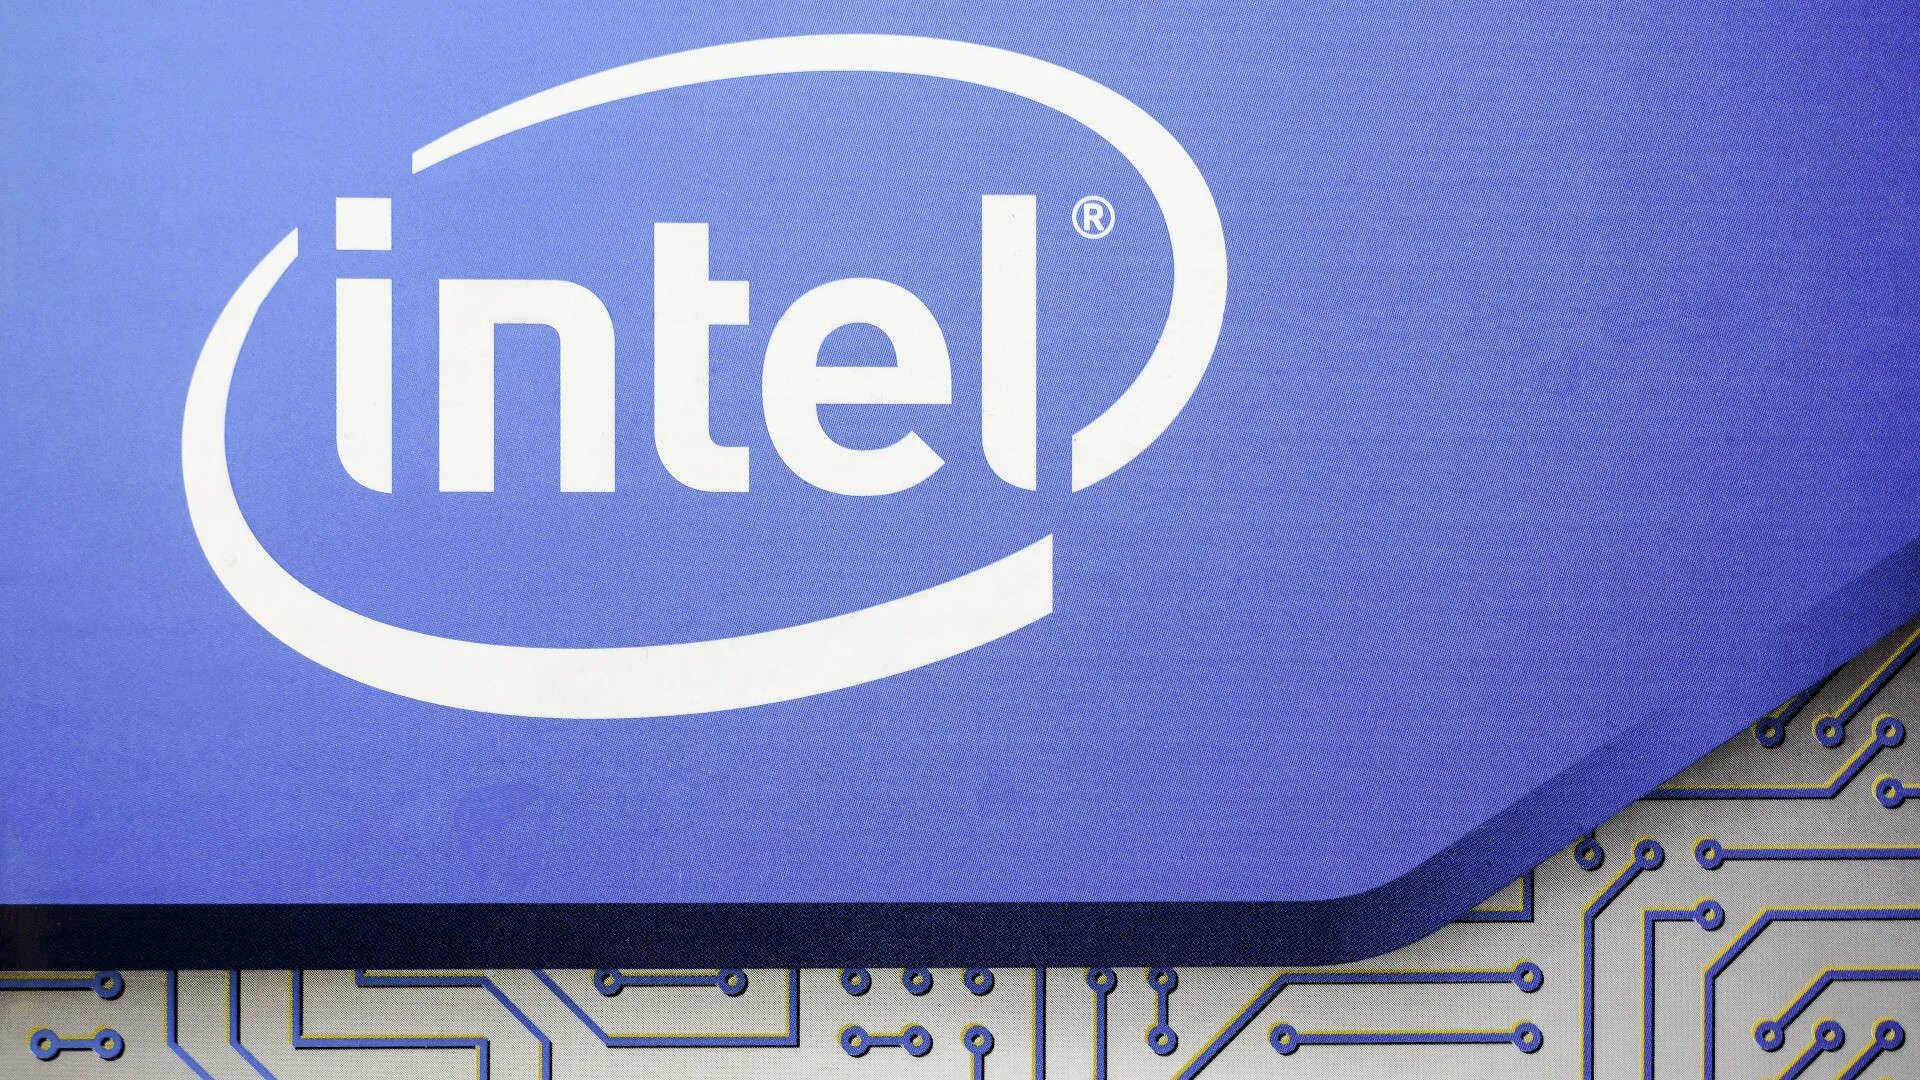 Производители процессоров intel. Интел. Фирма Intel. Корпорация Intel. Компания Intel логотип.